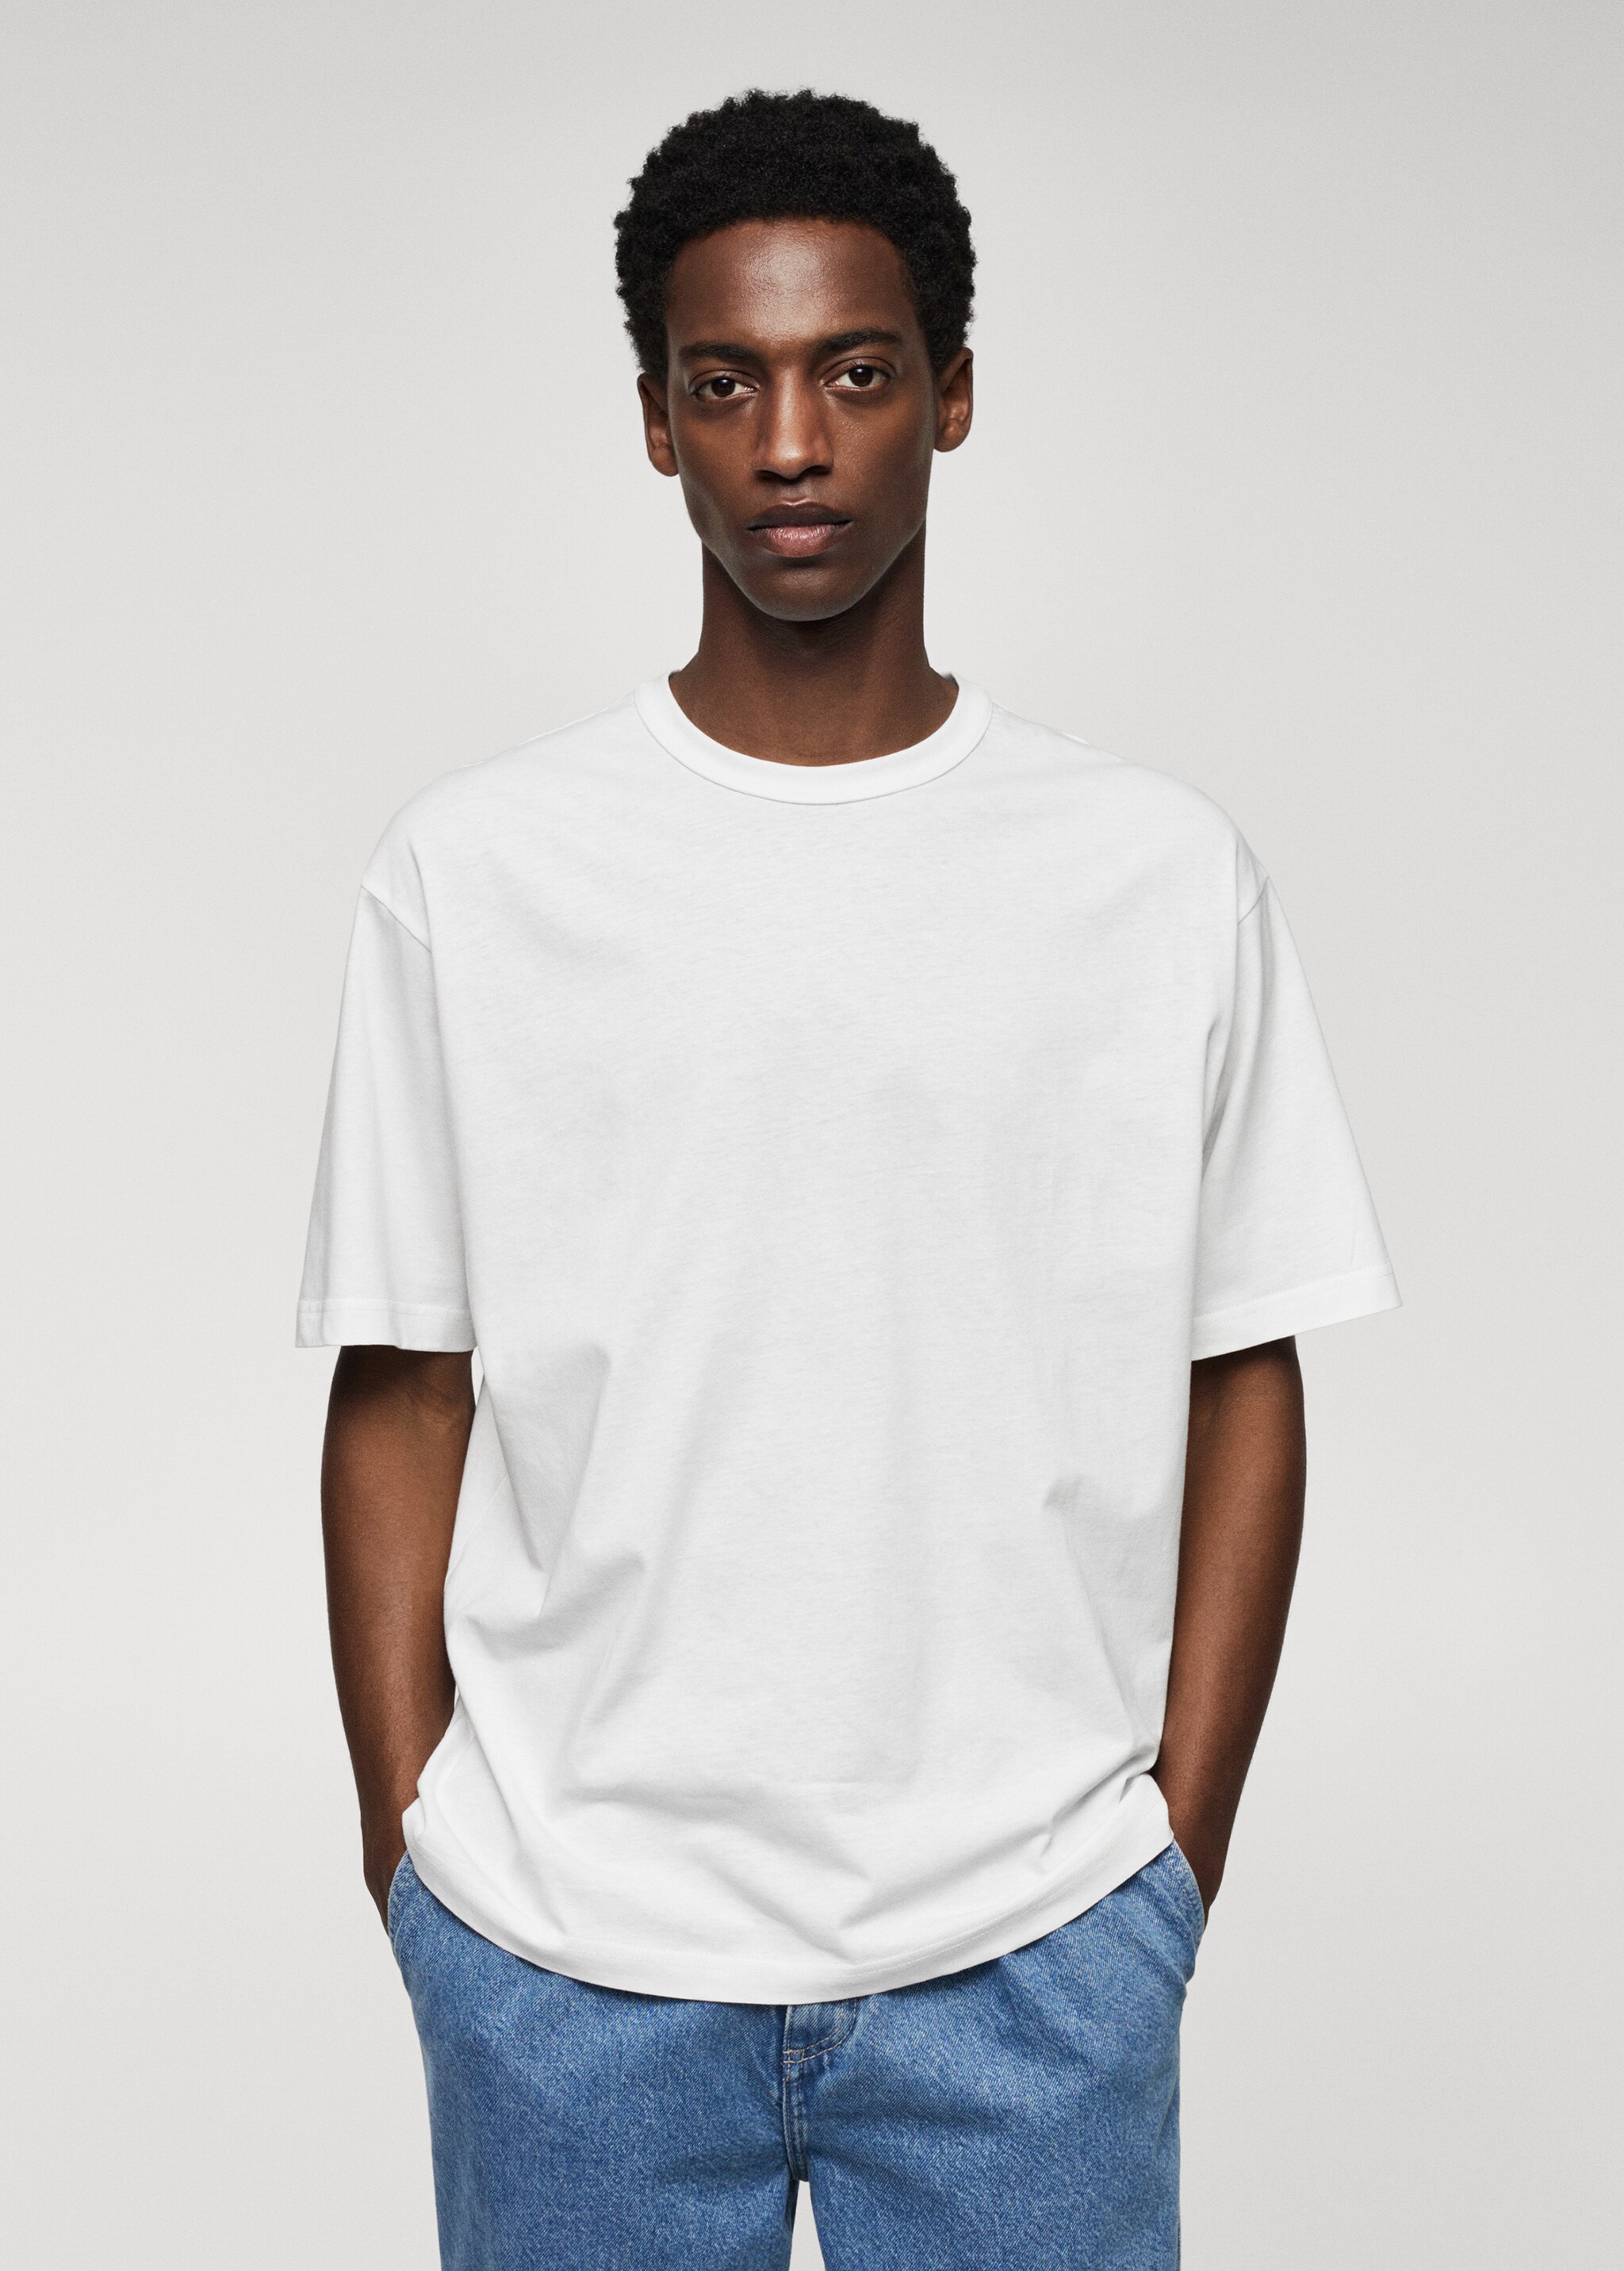 Camiseta 100% algodón relaxed fit - Plano medio